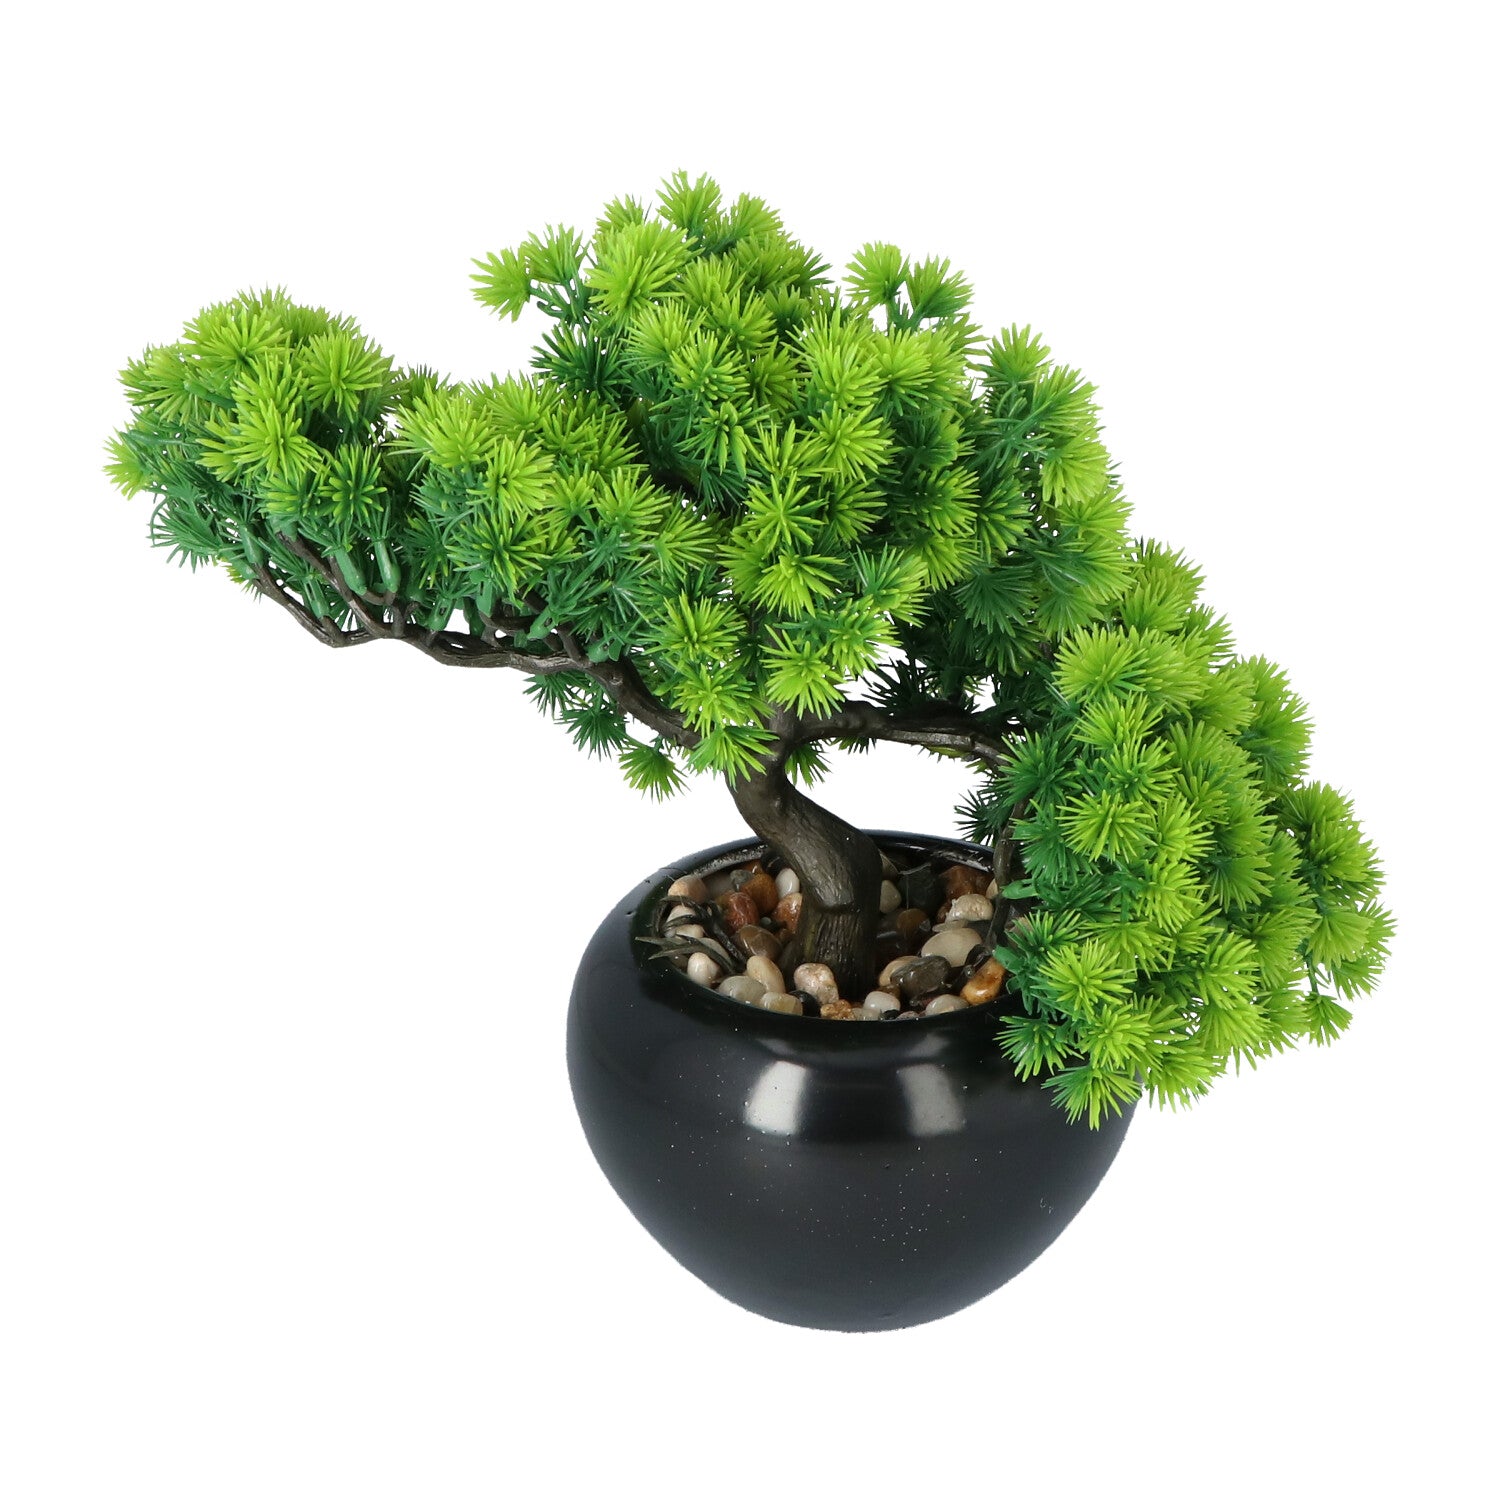 Kopu® Kunstpflanze Bonsai Lärche 26 cm mit schwarzem Topf – Bonsai-Baum